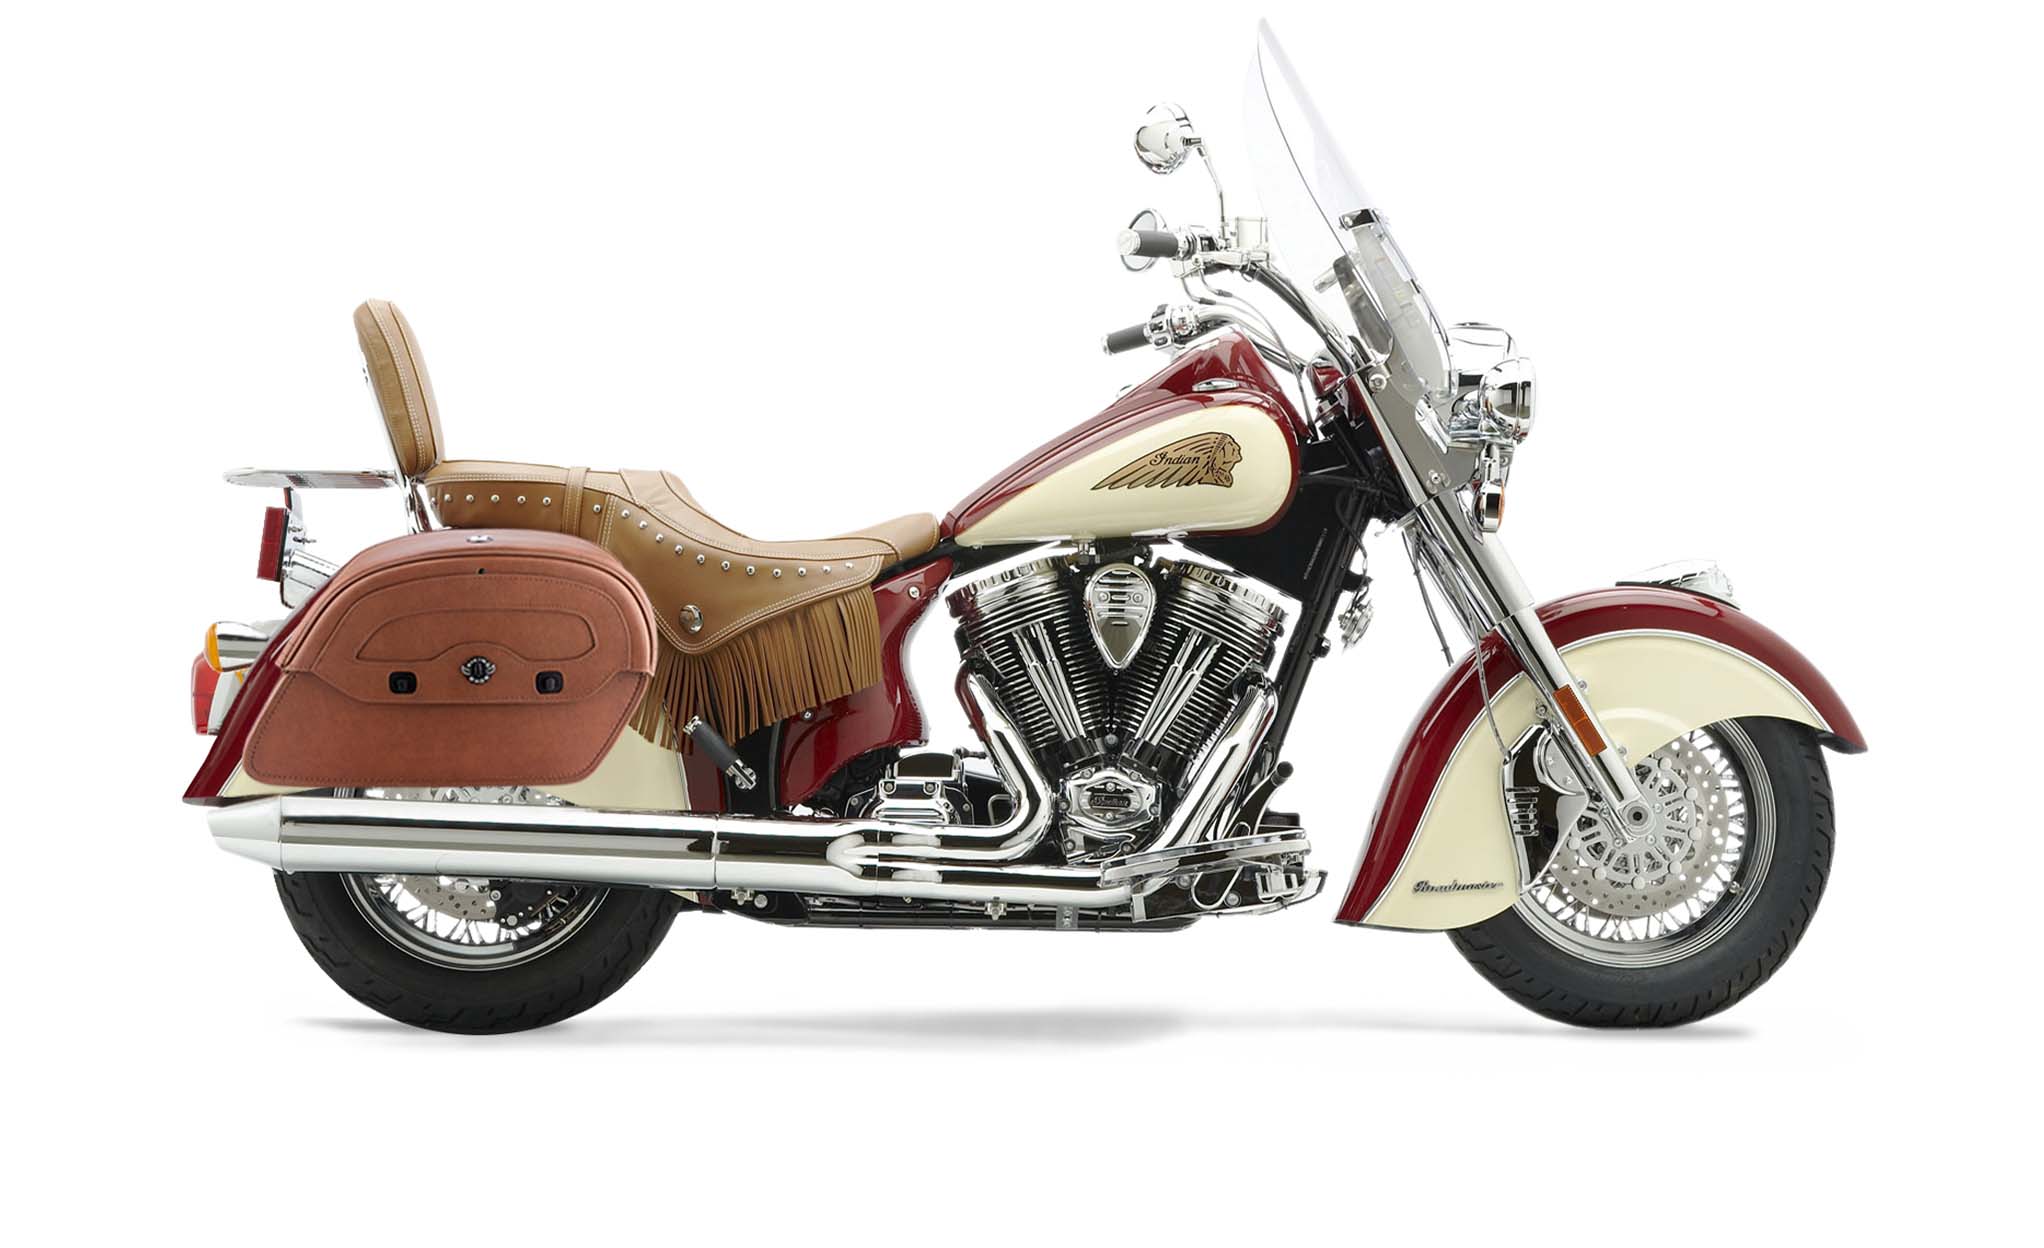 Viking Warrior Brown Large Indian Chief Roadmaster Leather Motorcycle Saddlebags on Bike Photo @expand